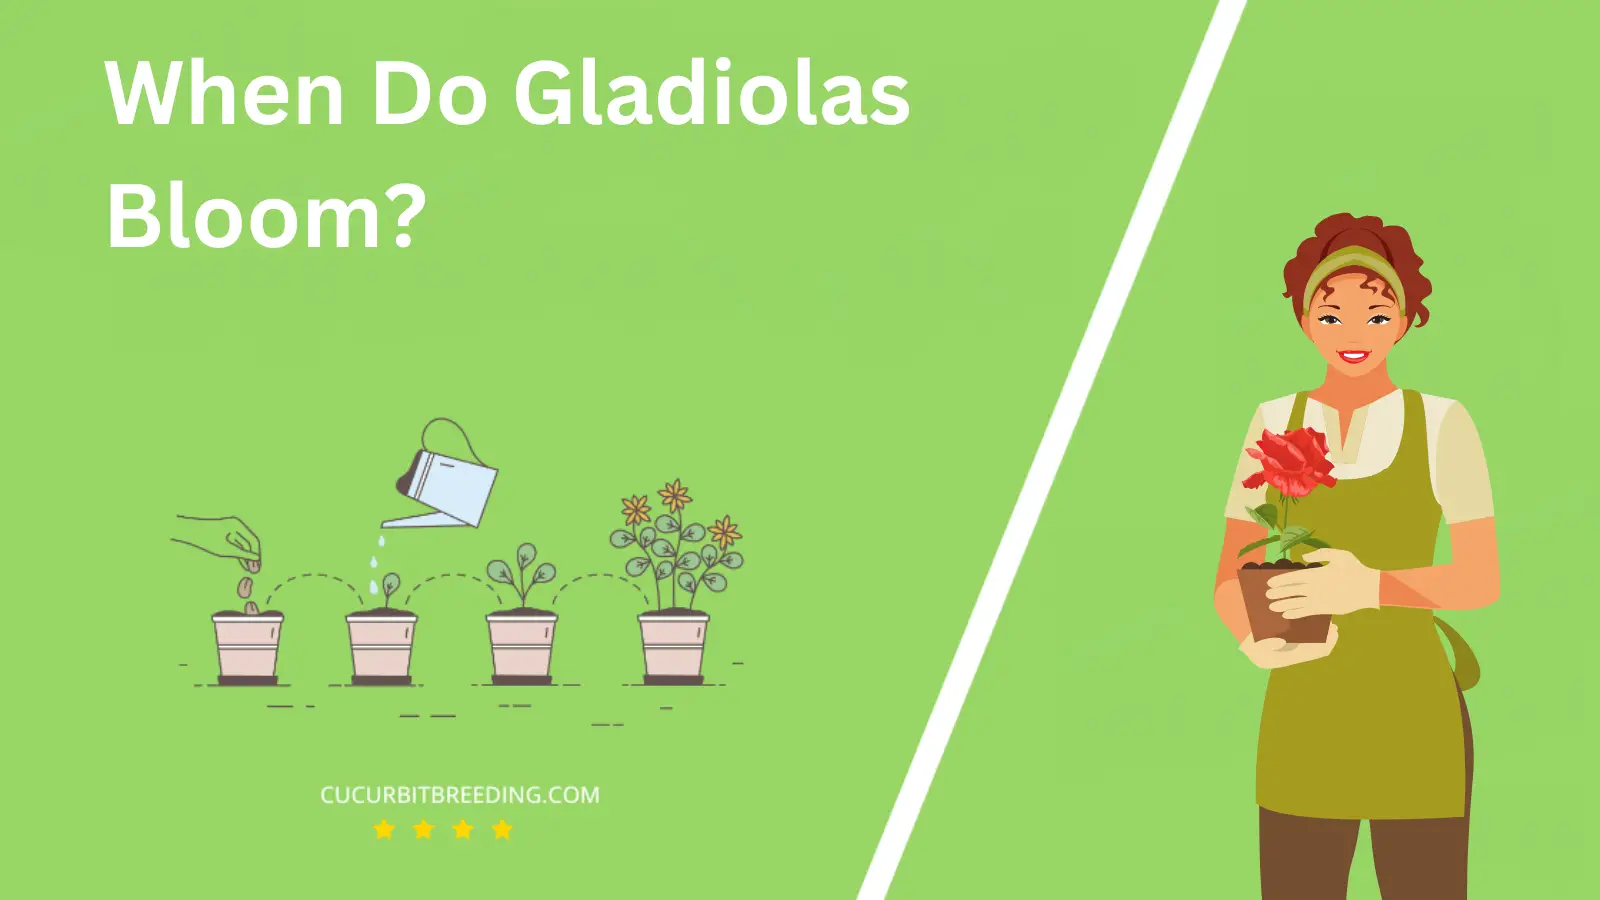 When Do Gladiolas Bloom?